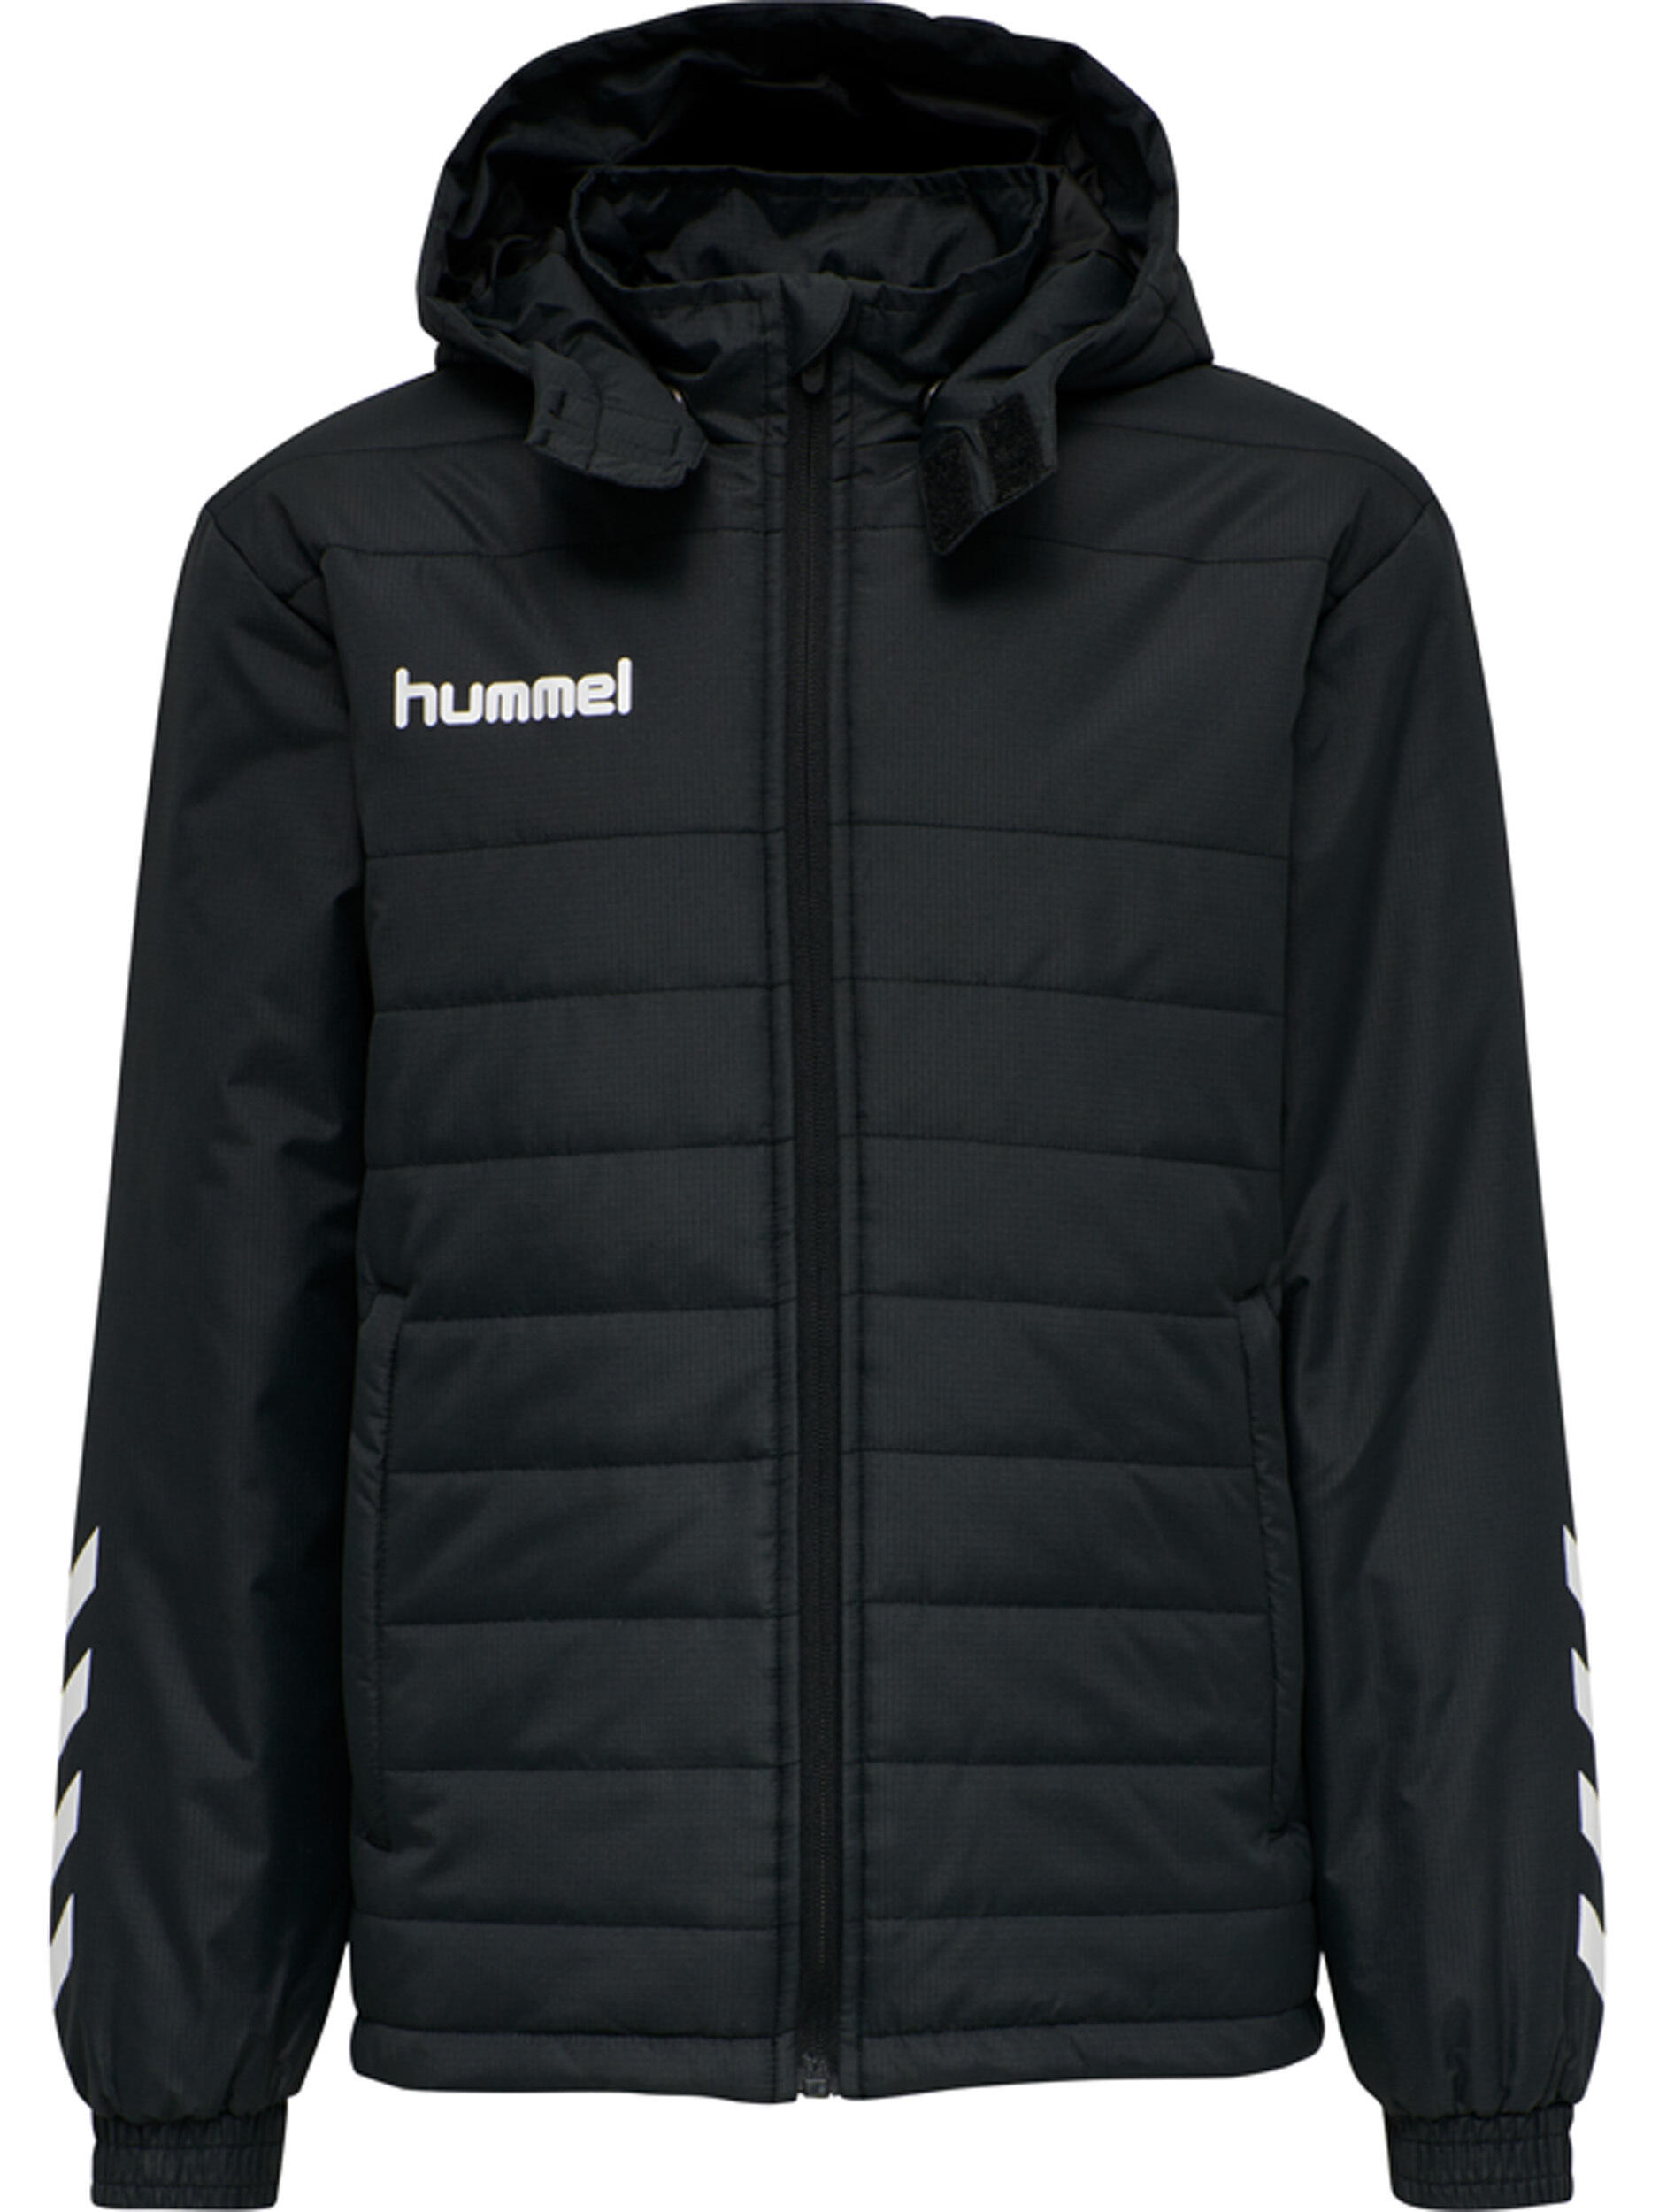 HUMMEL Short bench jacket for kids, great for football, in black